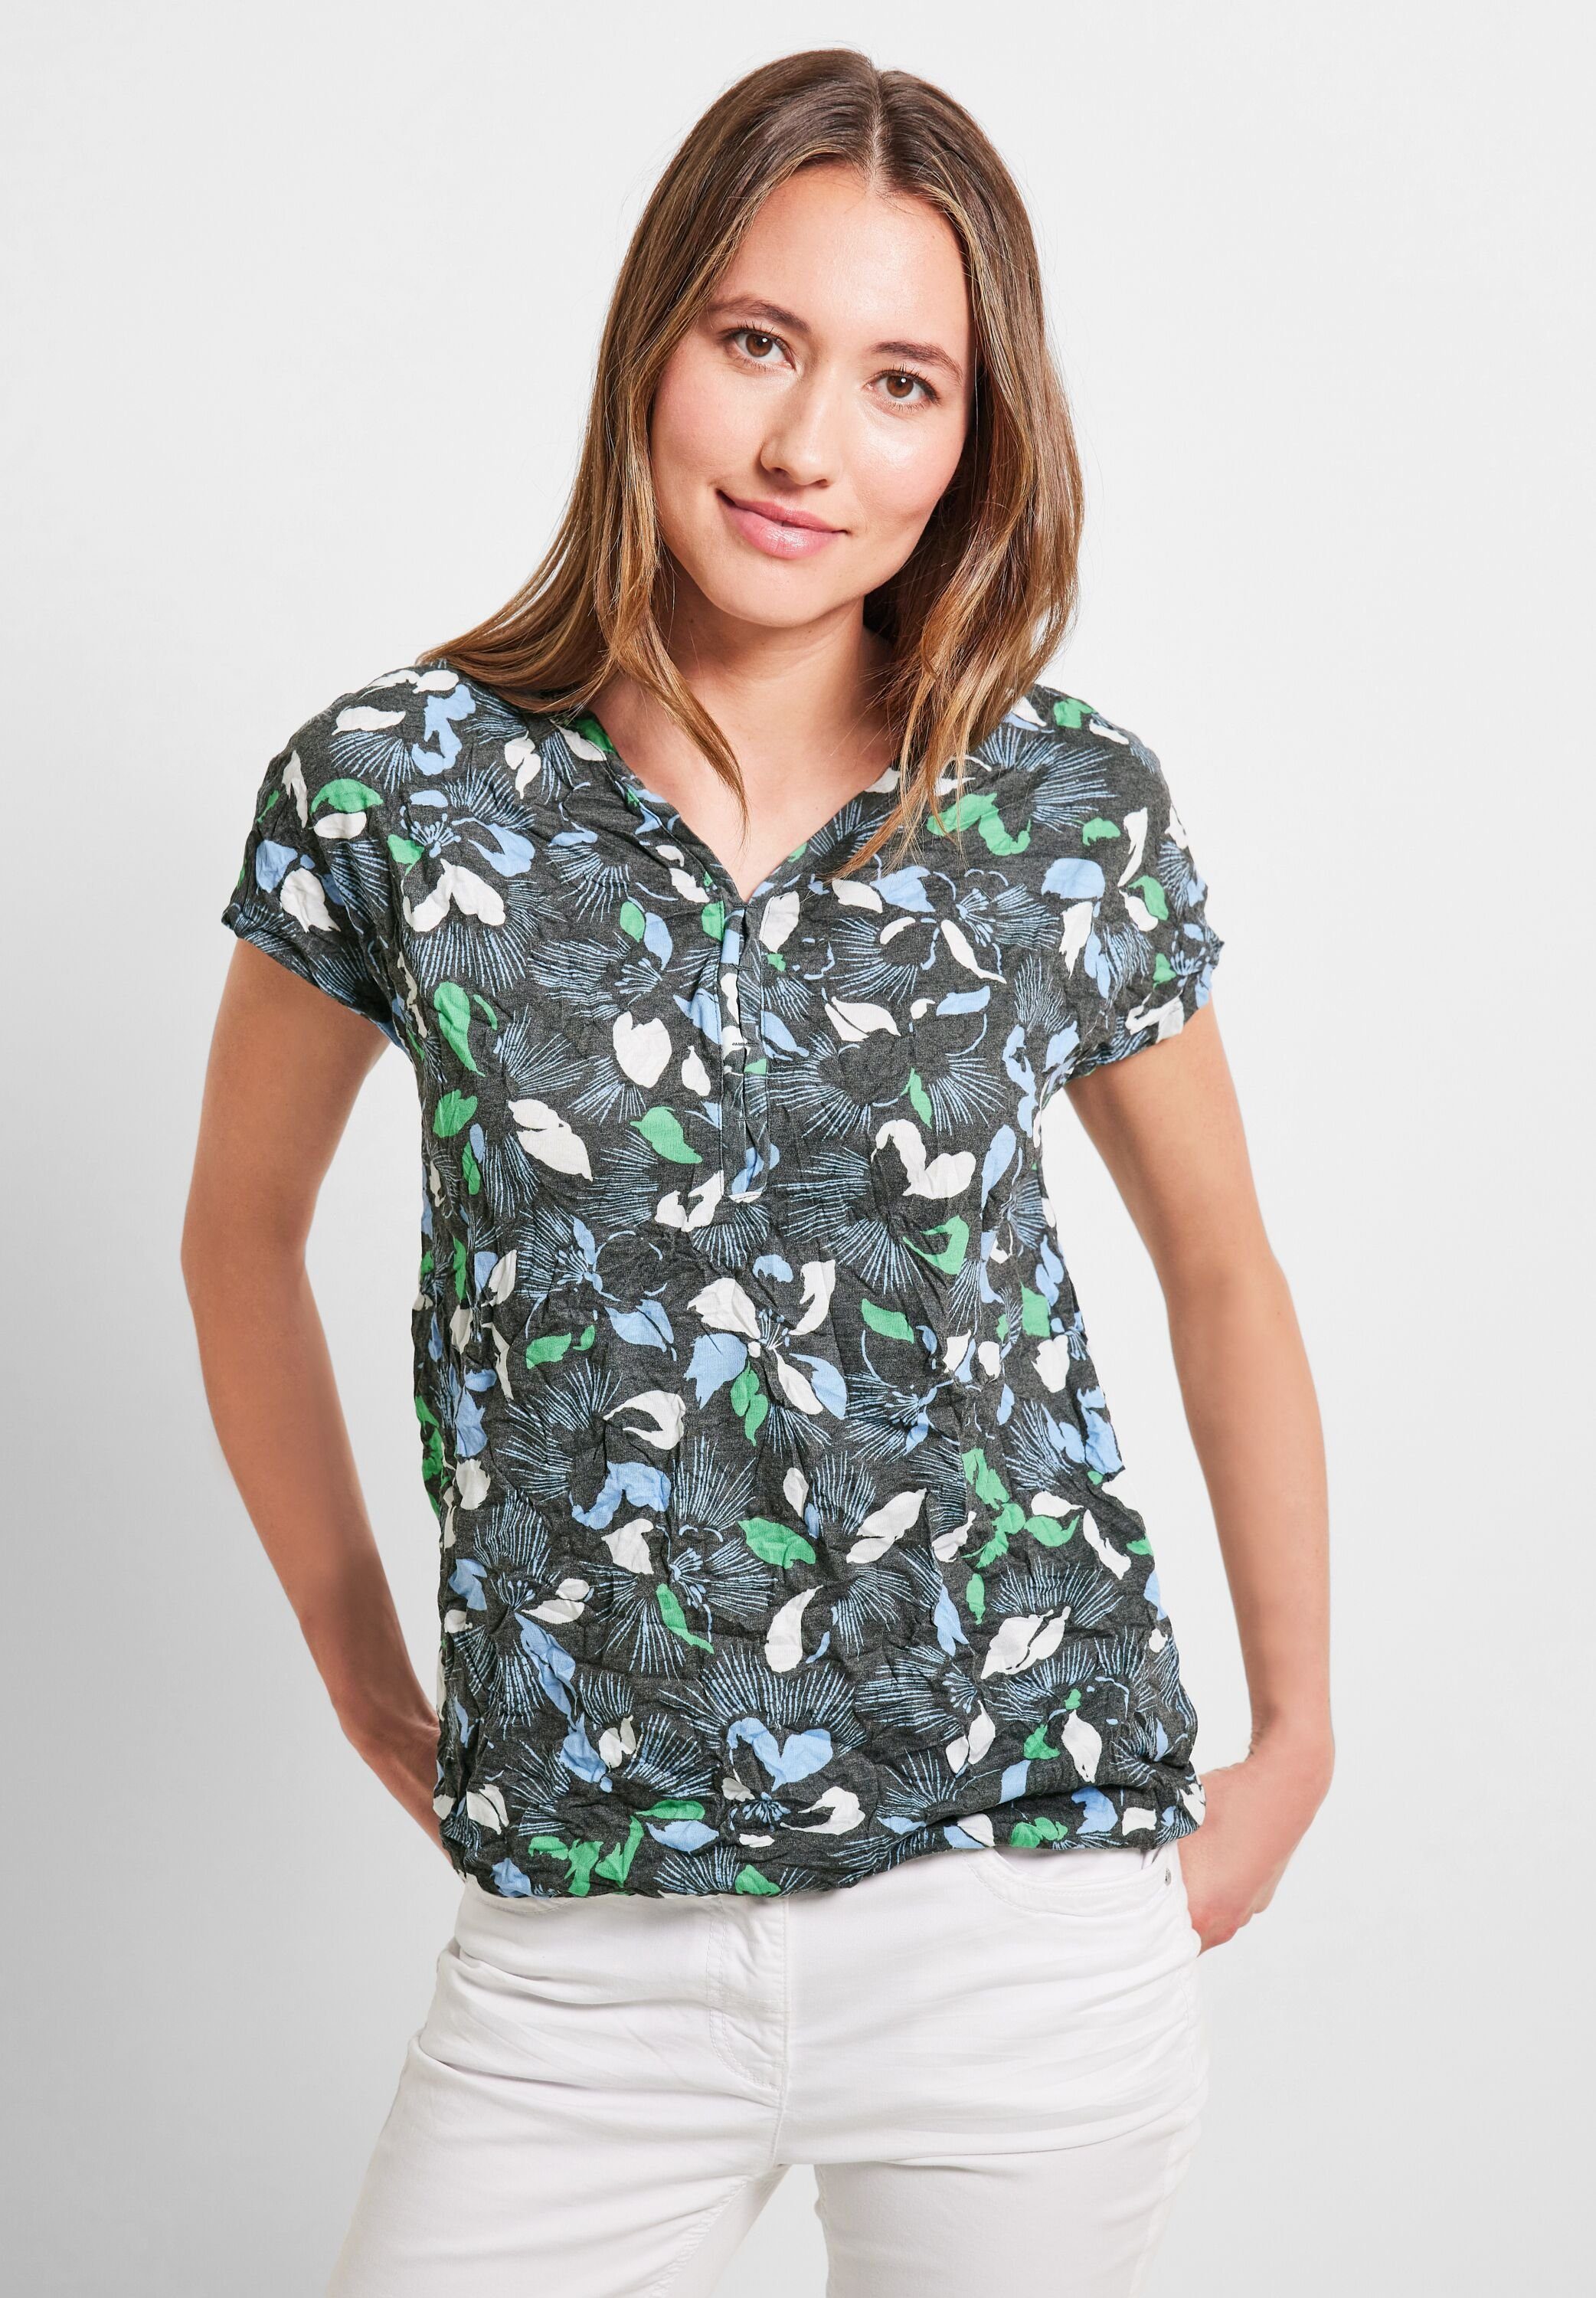 Cecil softem aus Print-Shirt easy khaki Materialmix